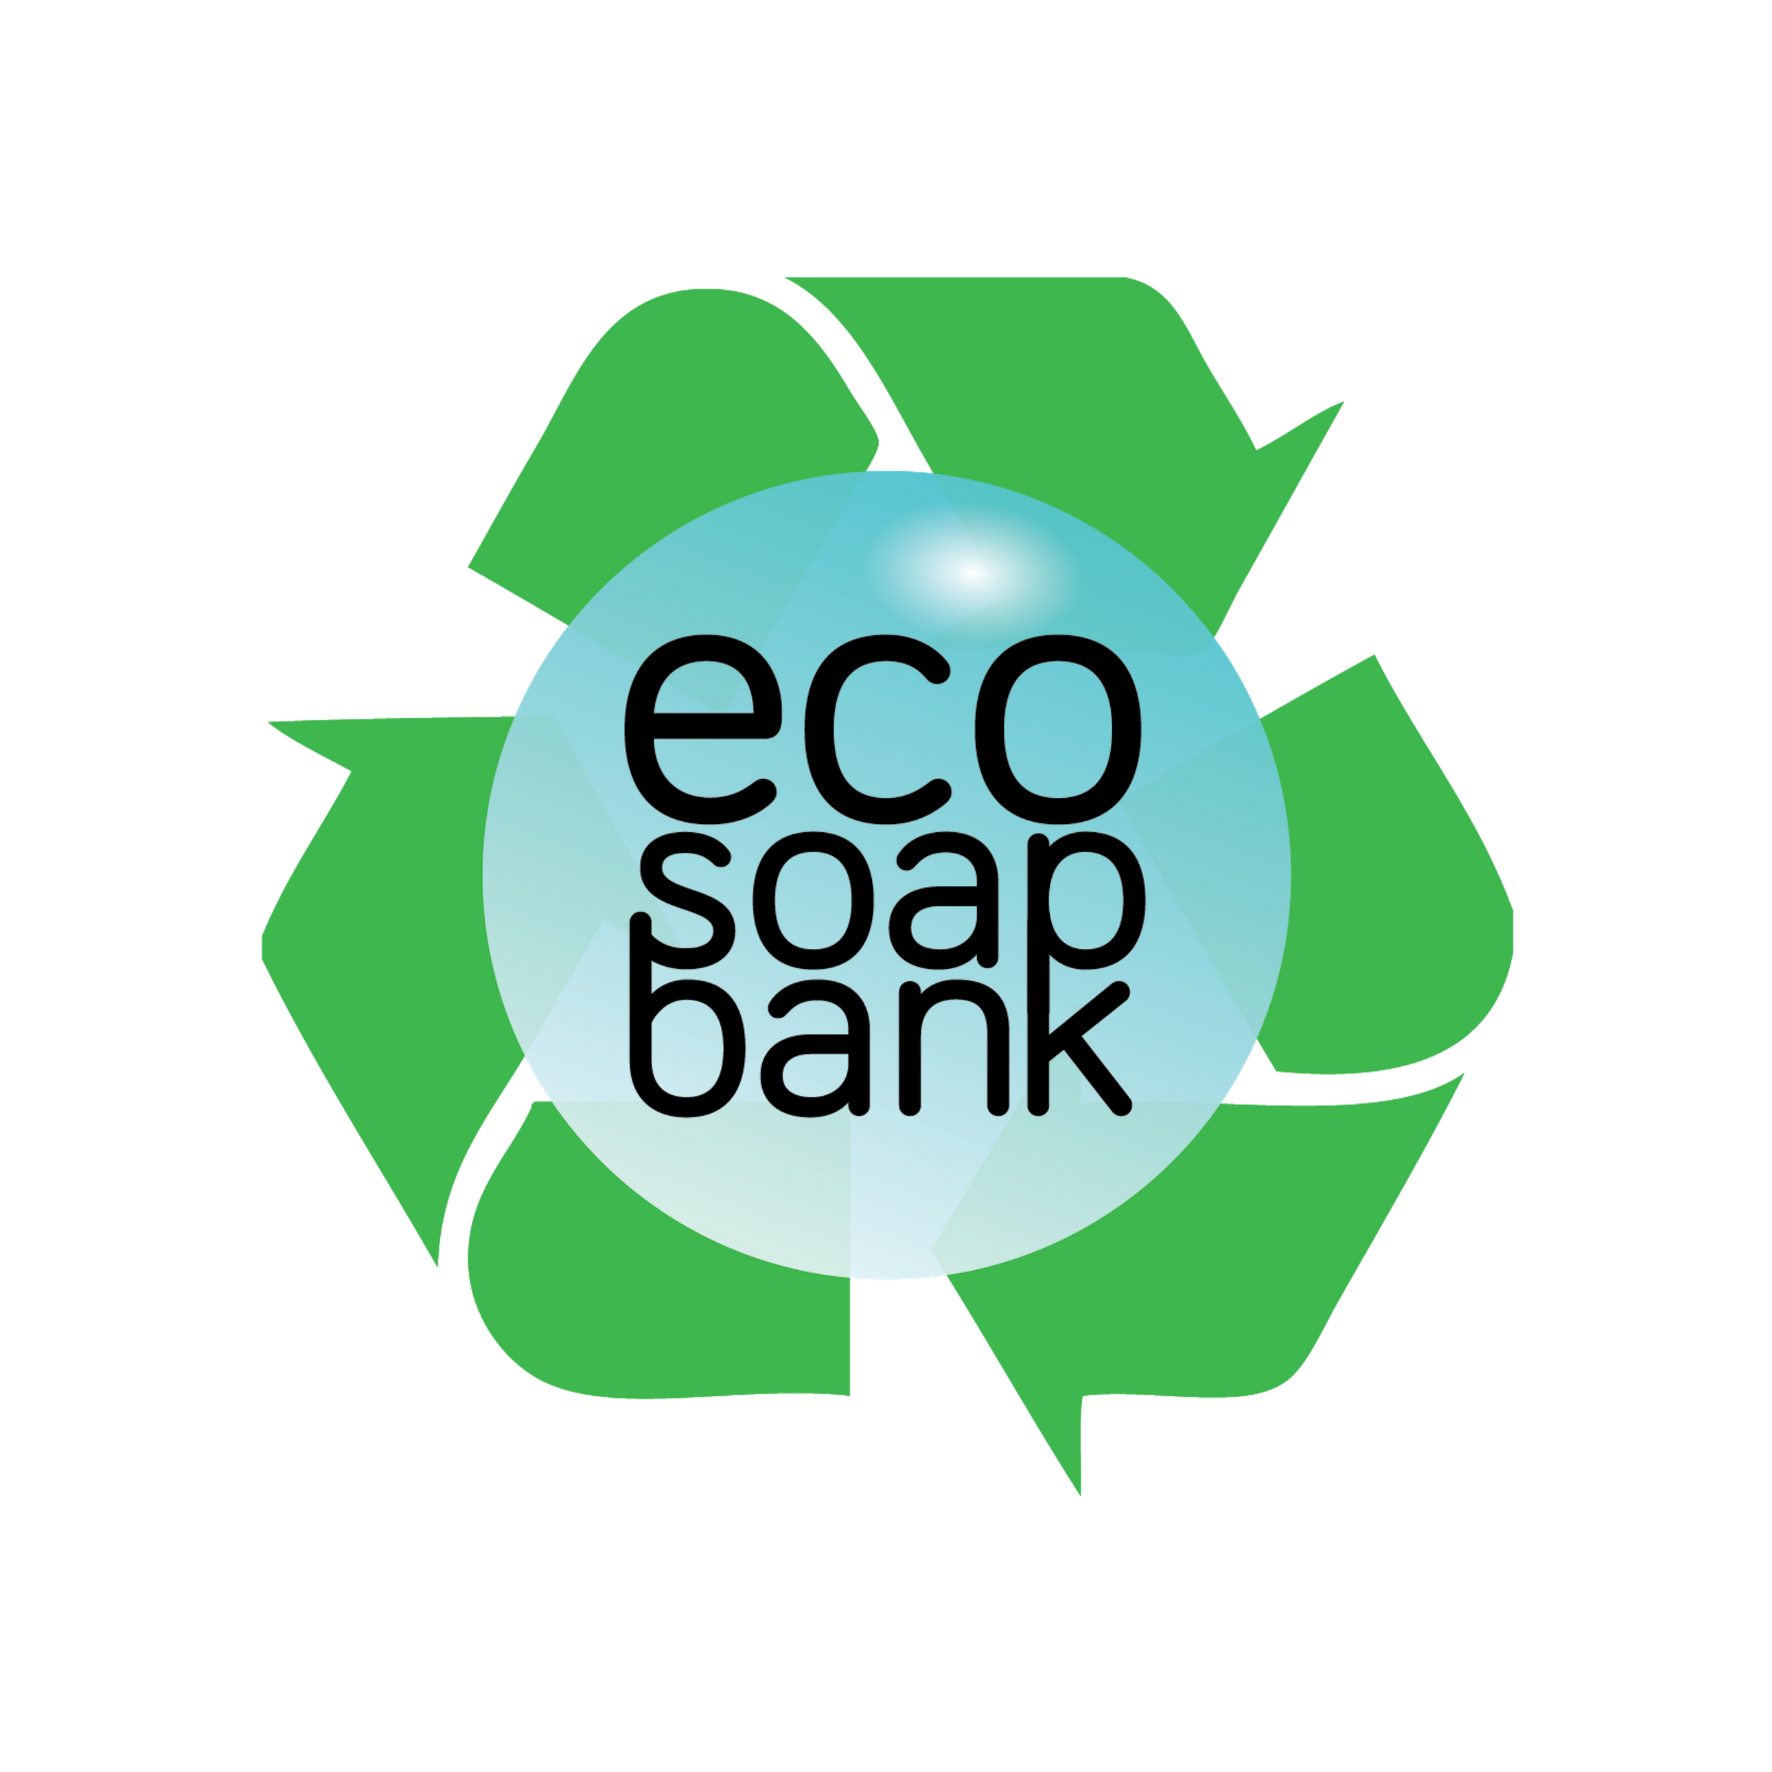 Eco Soap Bank logo (15 x 15 cm)